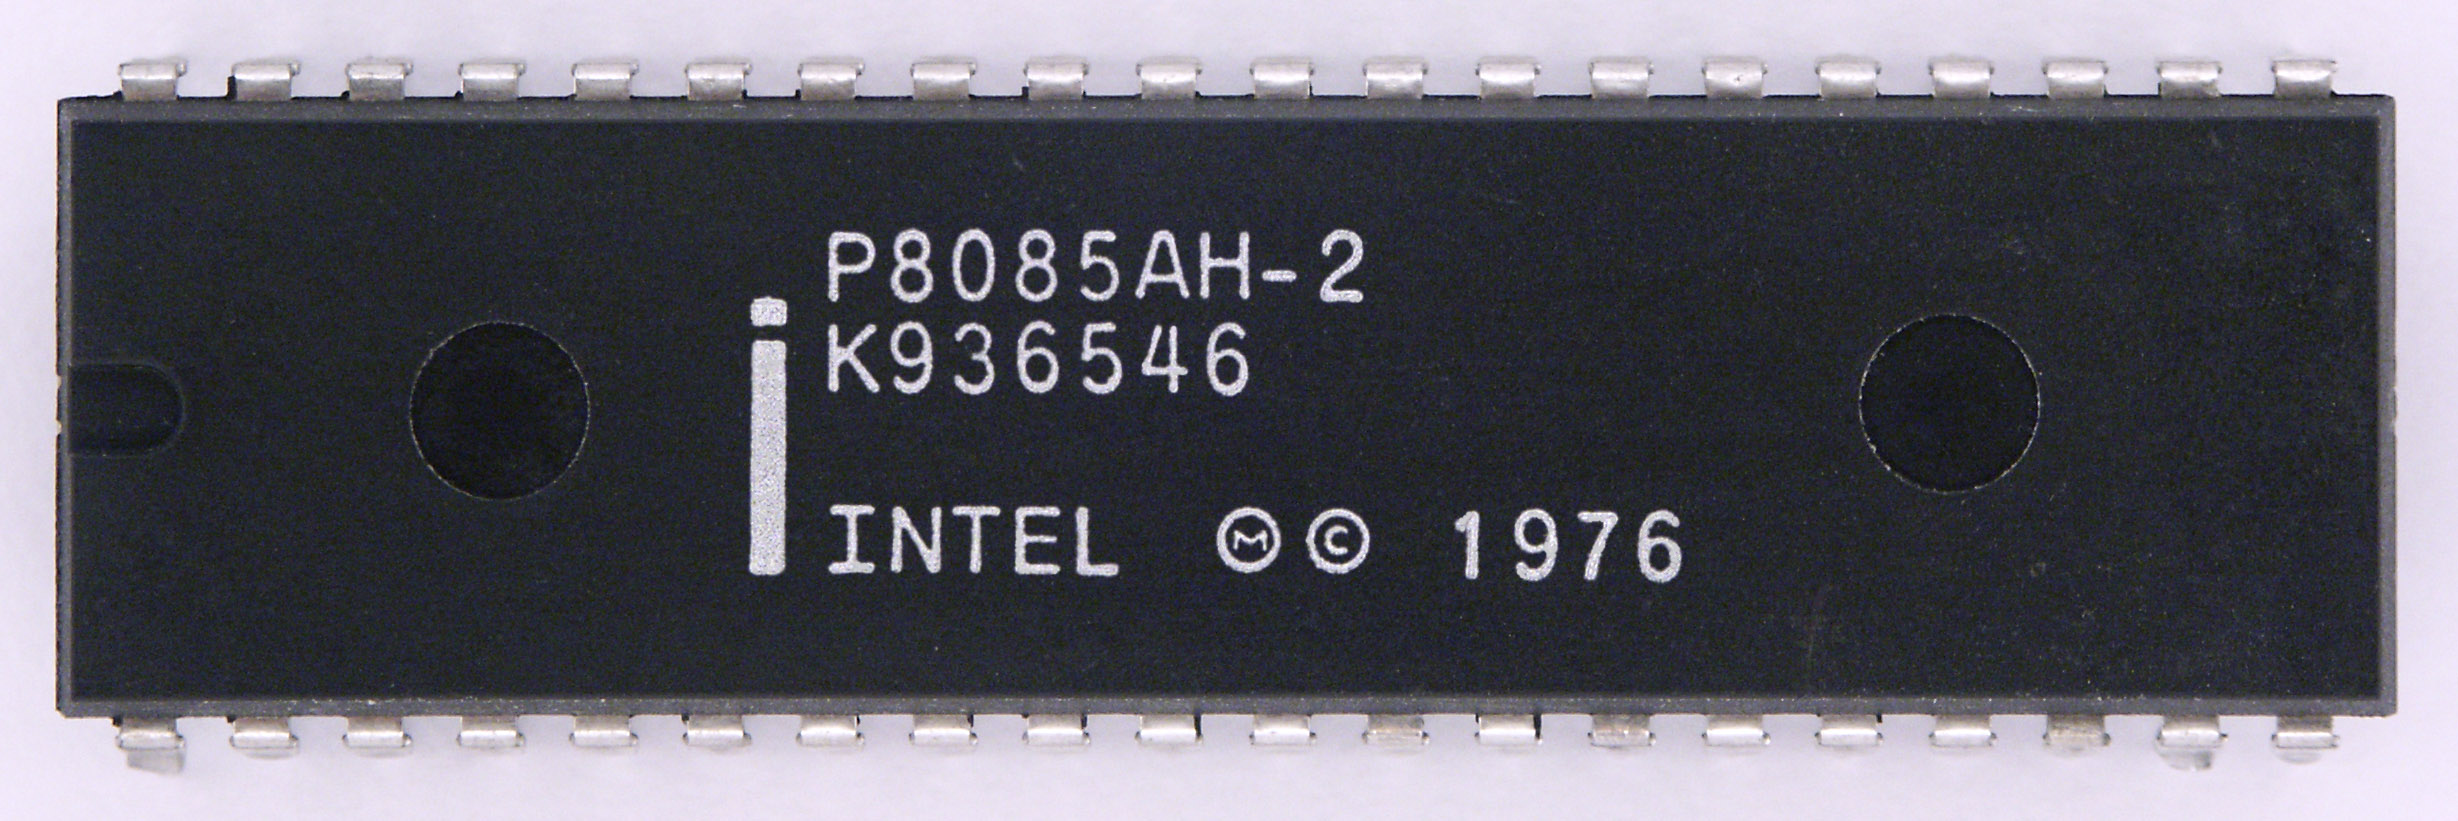 Intel_P8085AH-2.jpg